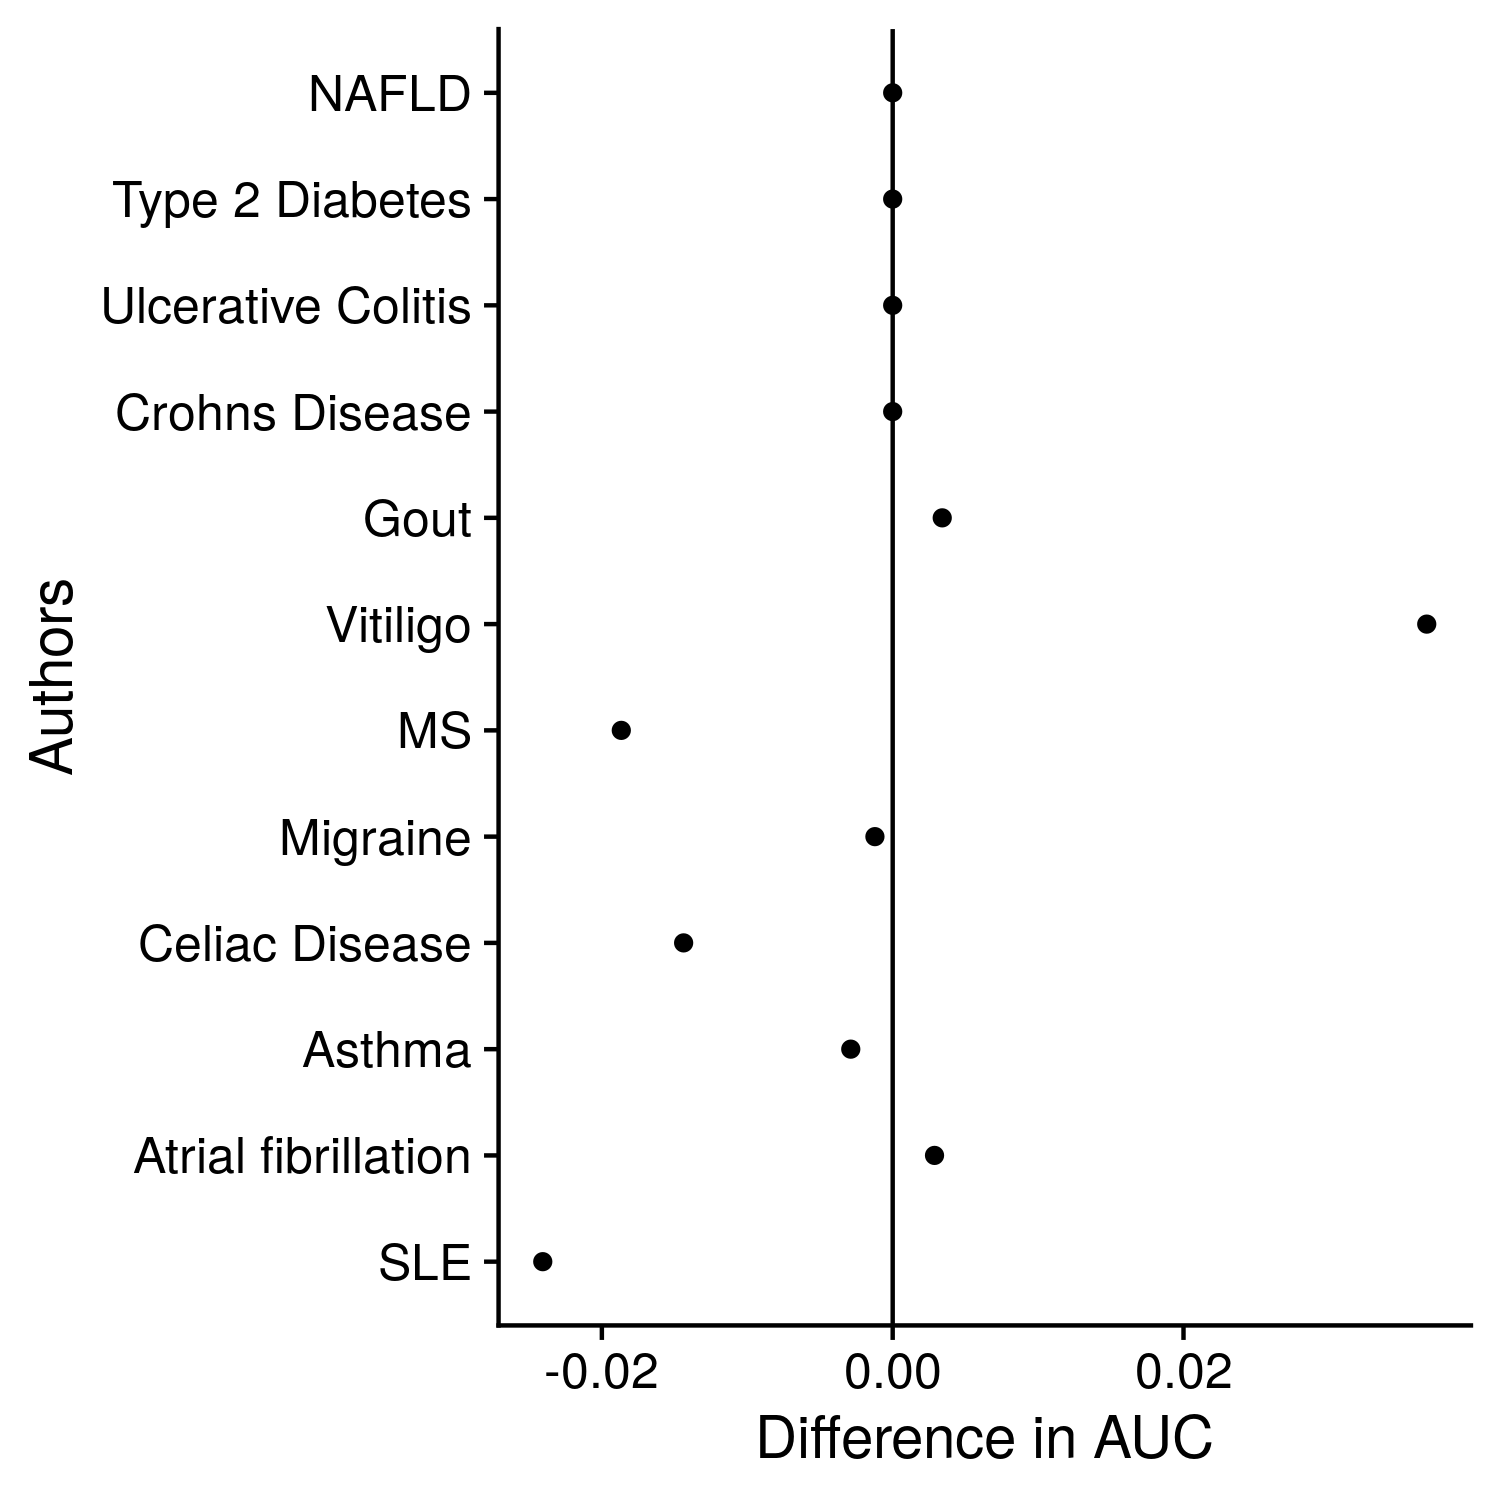 Comparison of training and testing AUCs